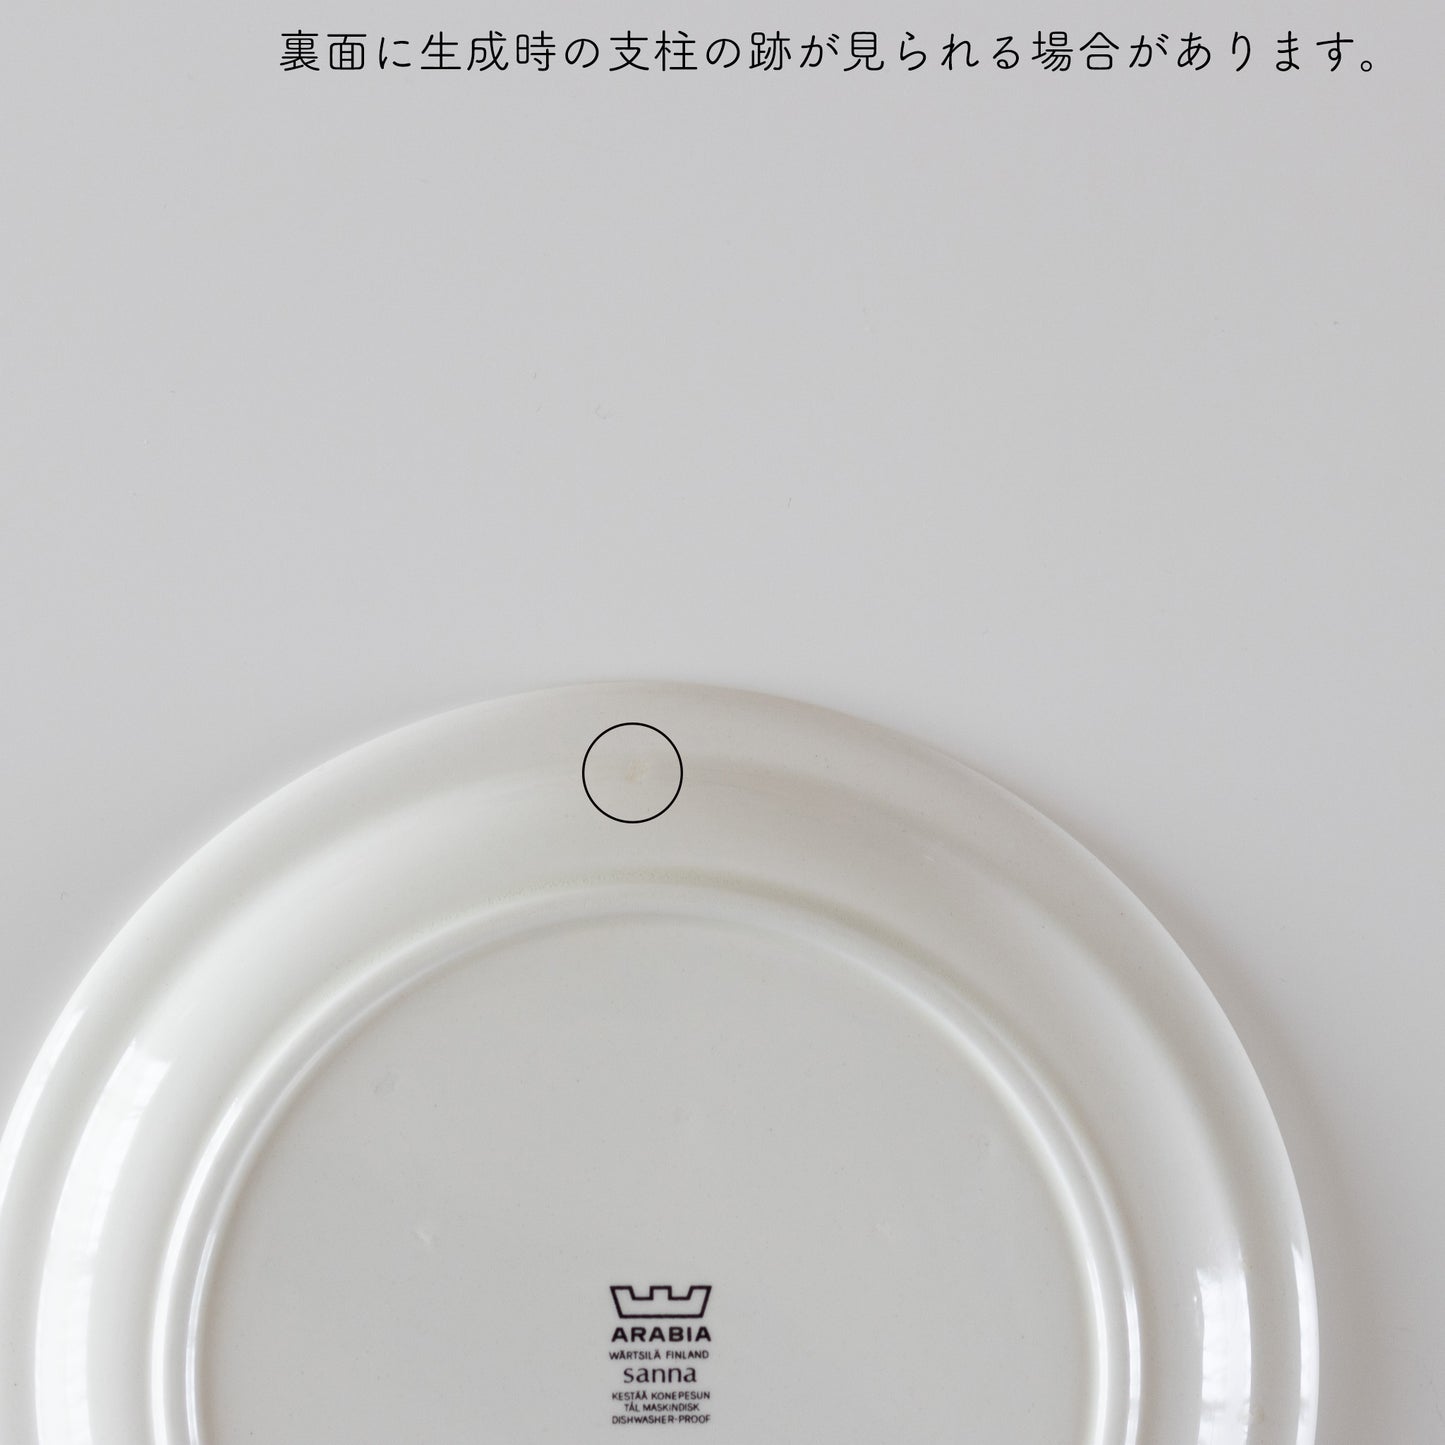 sanna (サンナ) plate 23.5cm / arabia (アラビア)